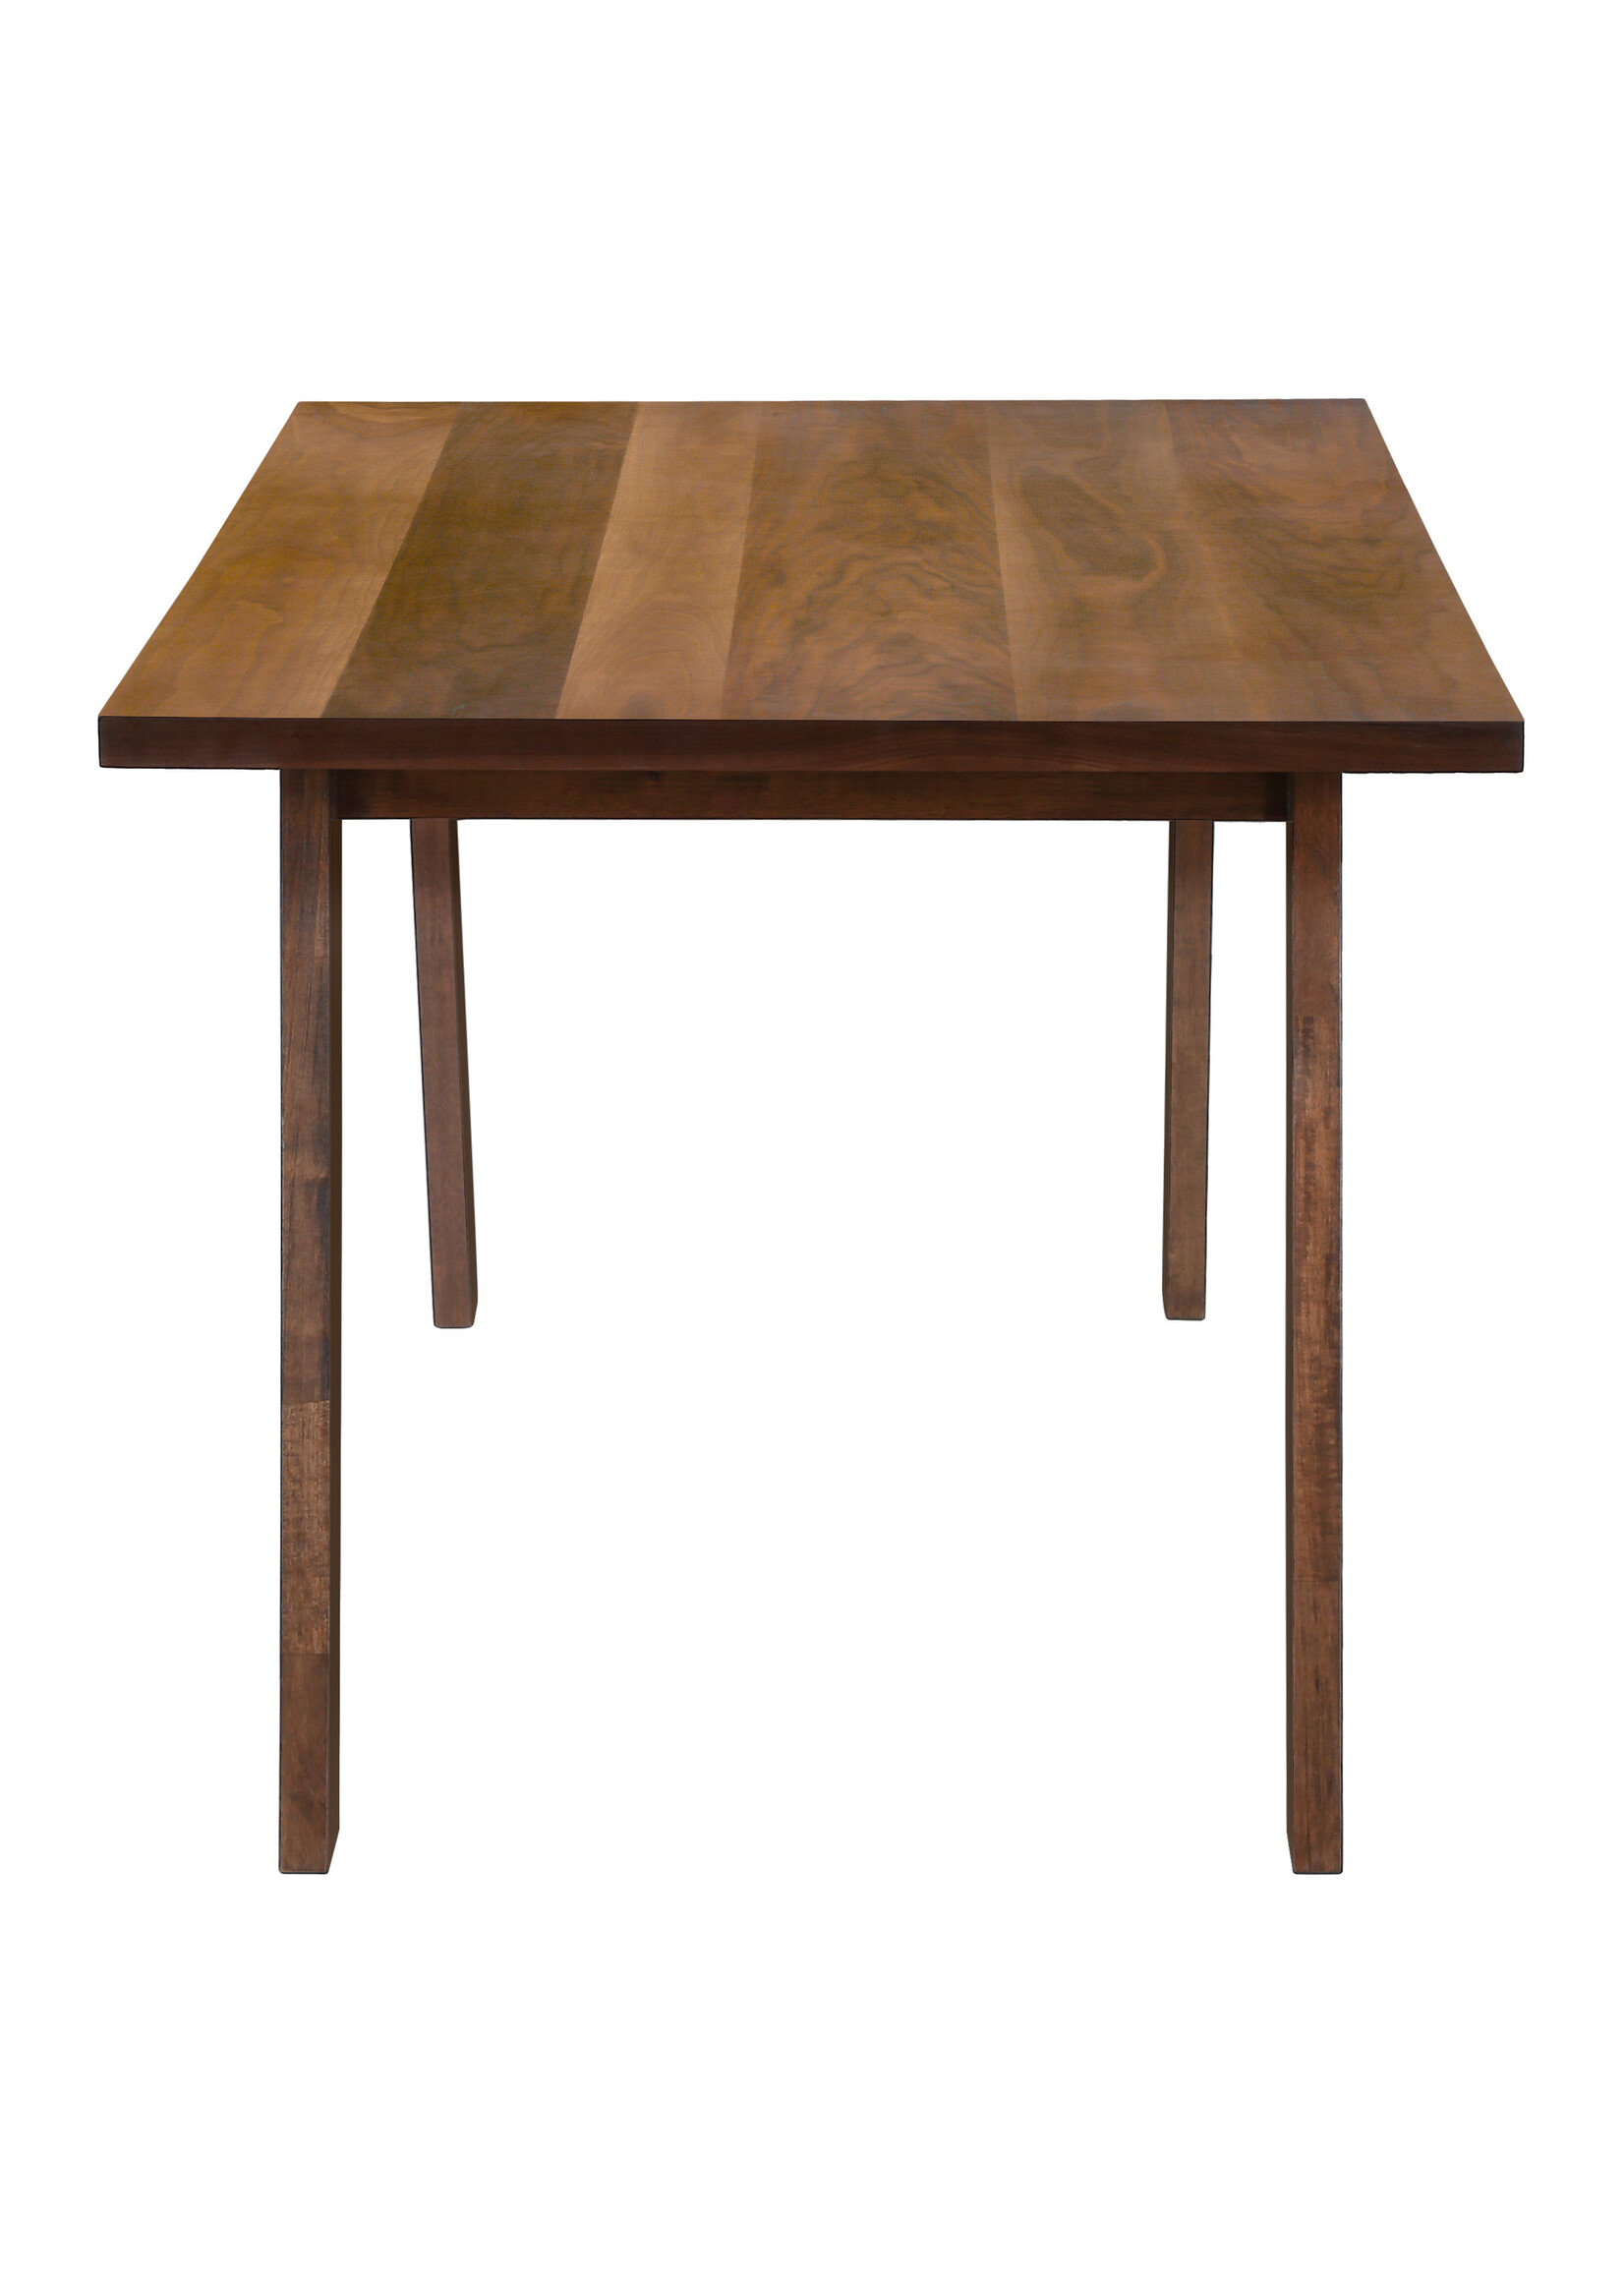 MONARCH I1315 DINING TABLE - BROWN WALNUT VENEER  36X60IN /  91x152CM